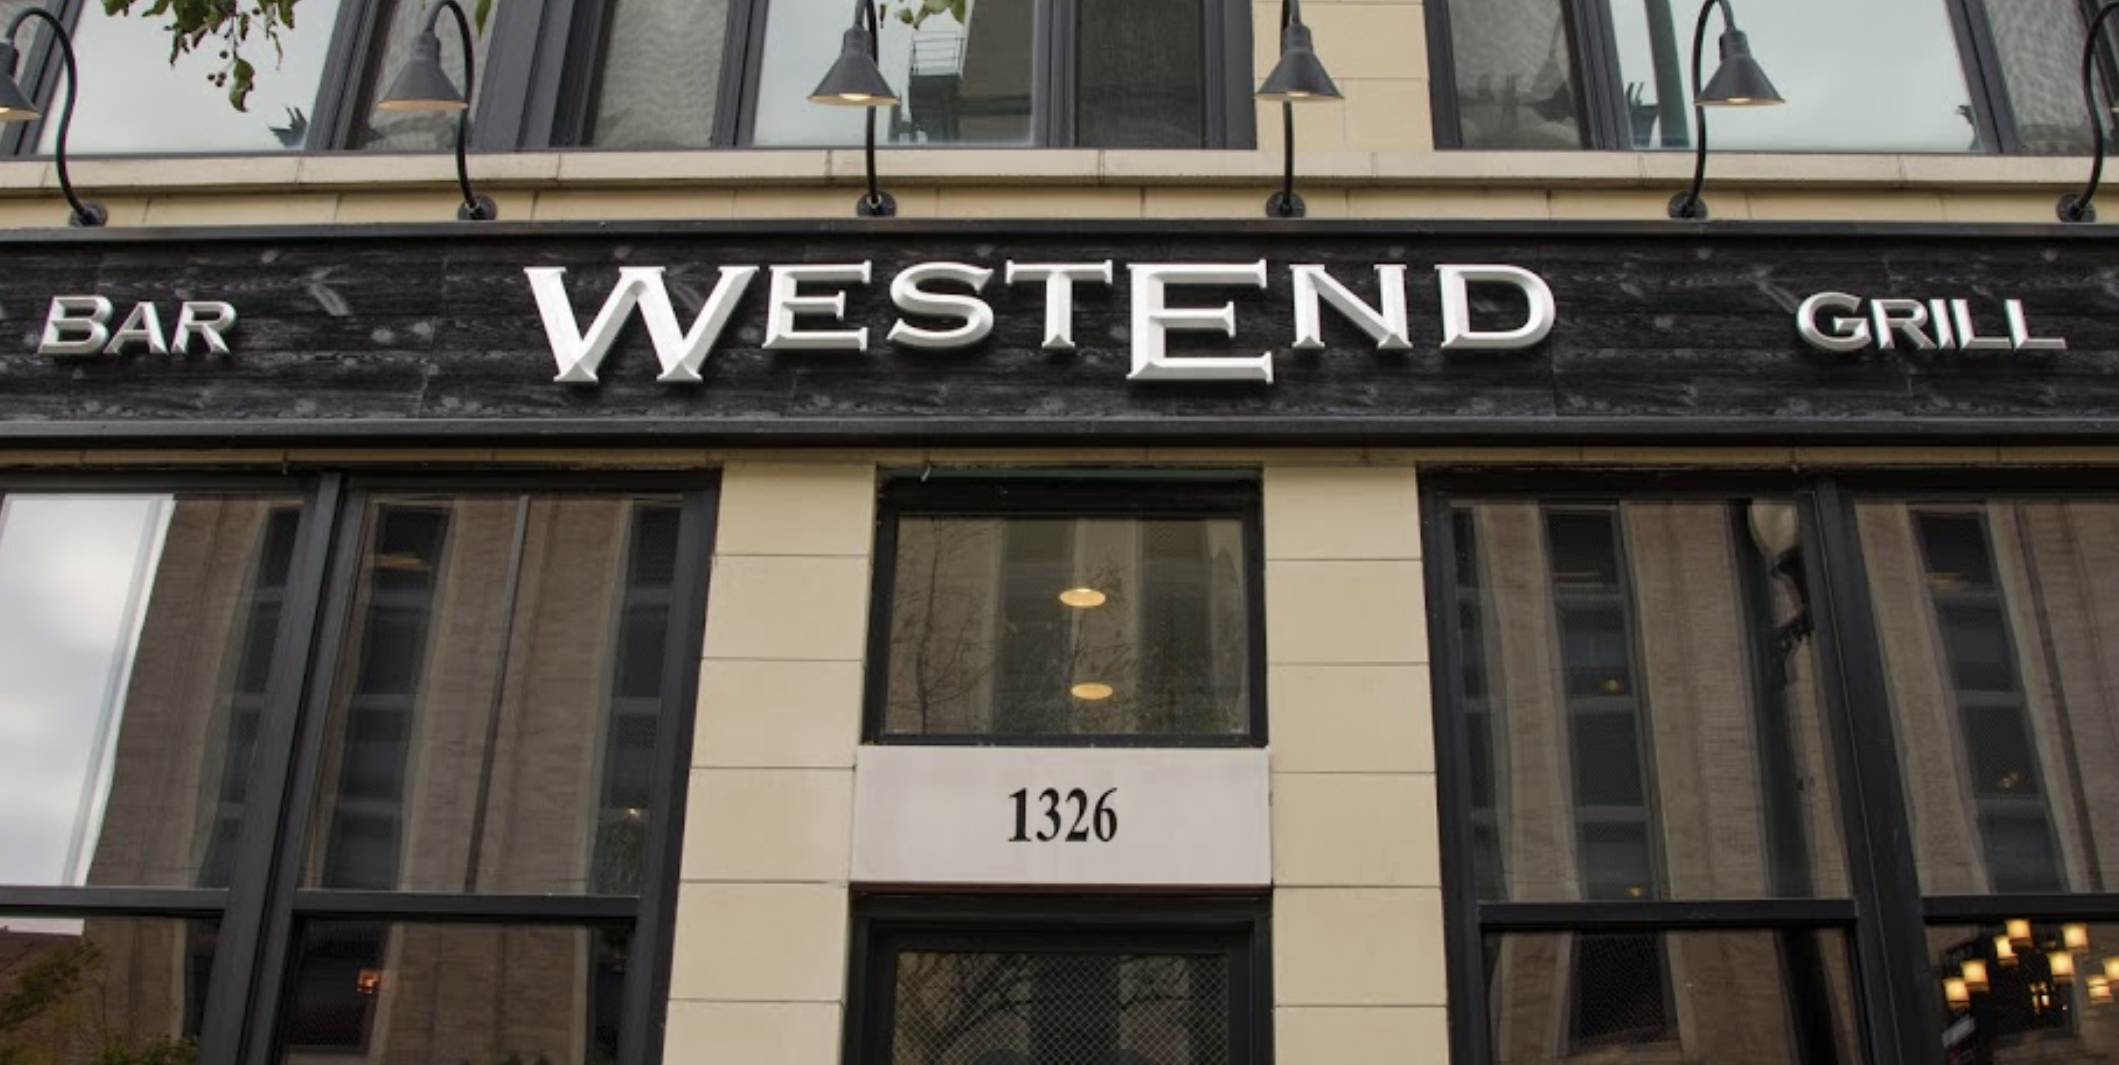 A bar’s exterior reading “WestEnd”